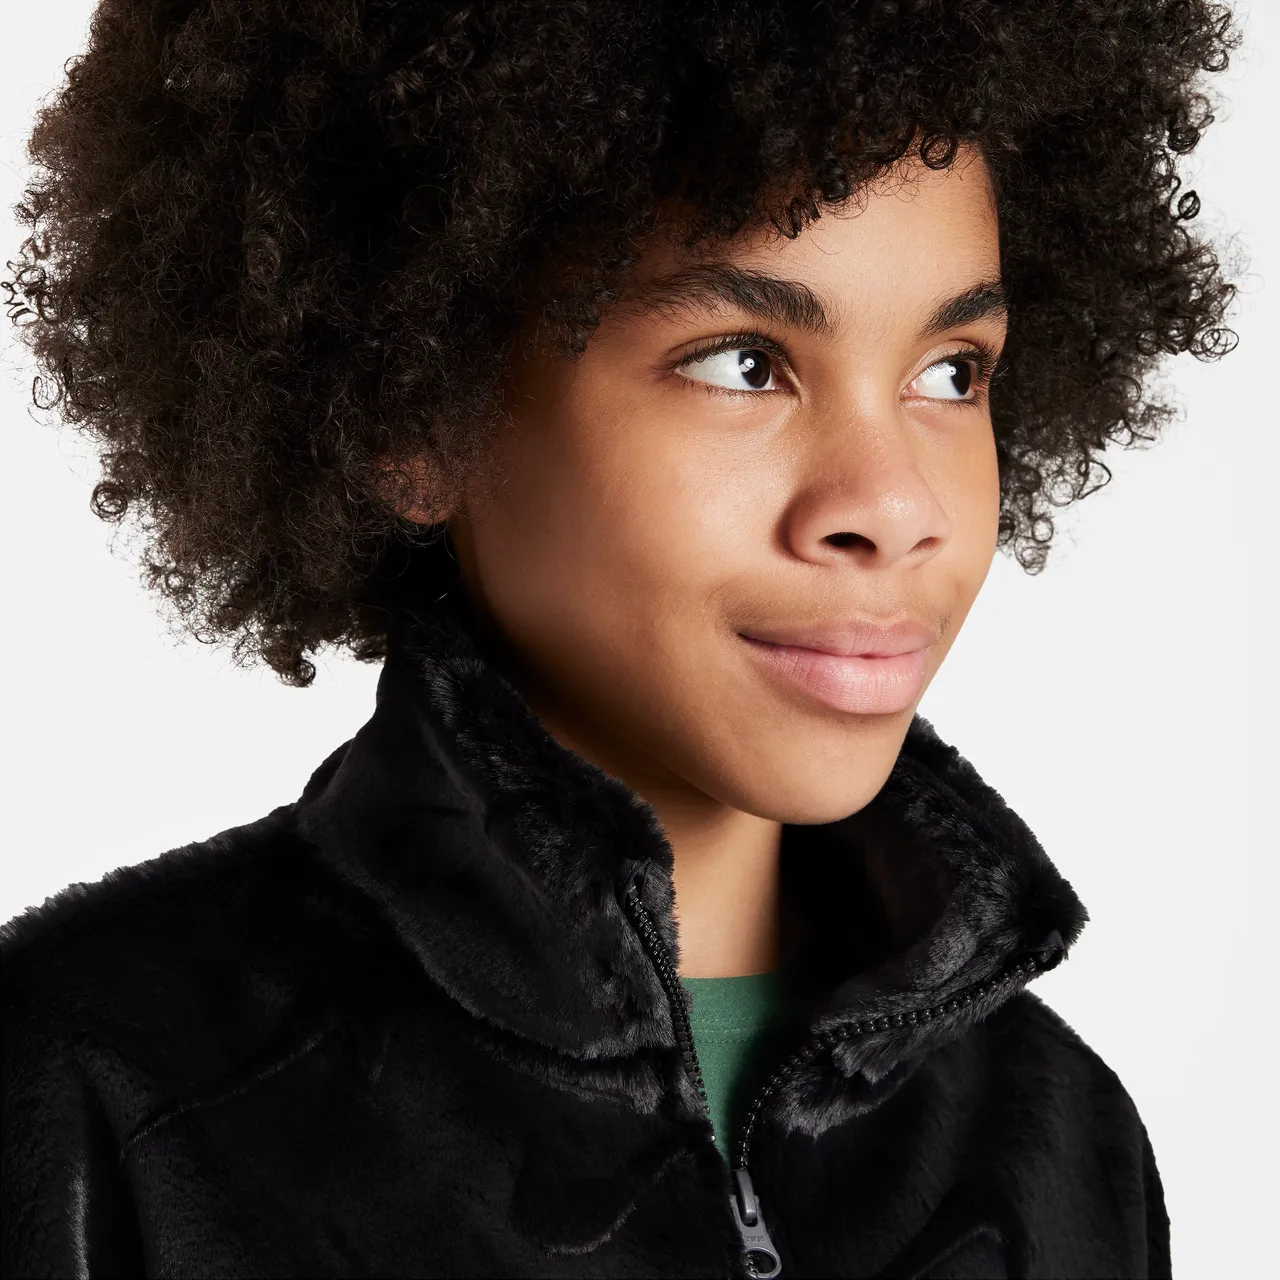 Nike Sportswear Older Kids' (Girls') Jacket - Black - Polyester